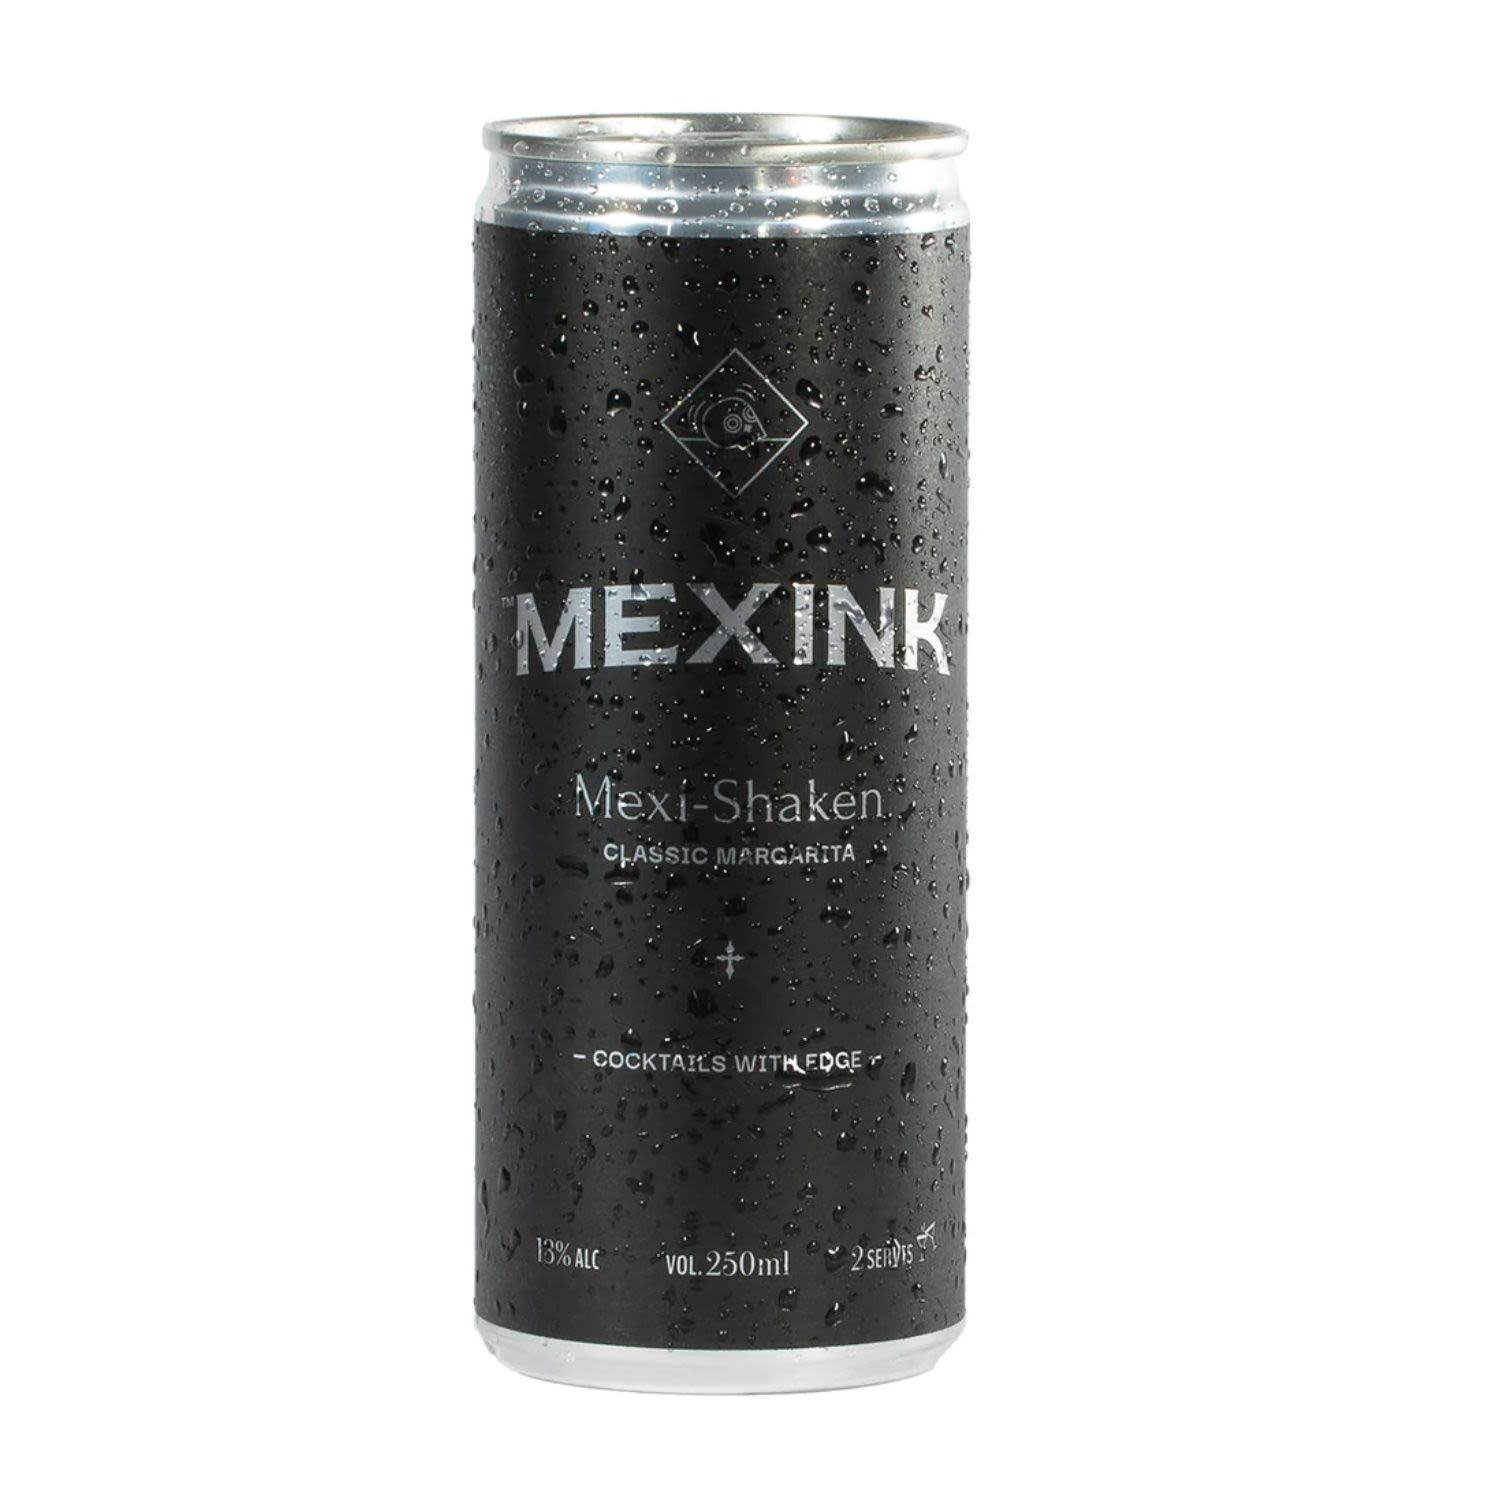 Mexink Mexi-Shaken Classic Margarita Can 250mL 4 Pack